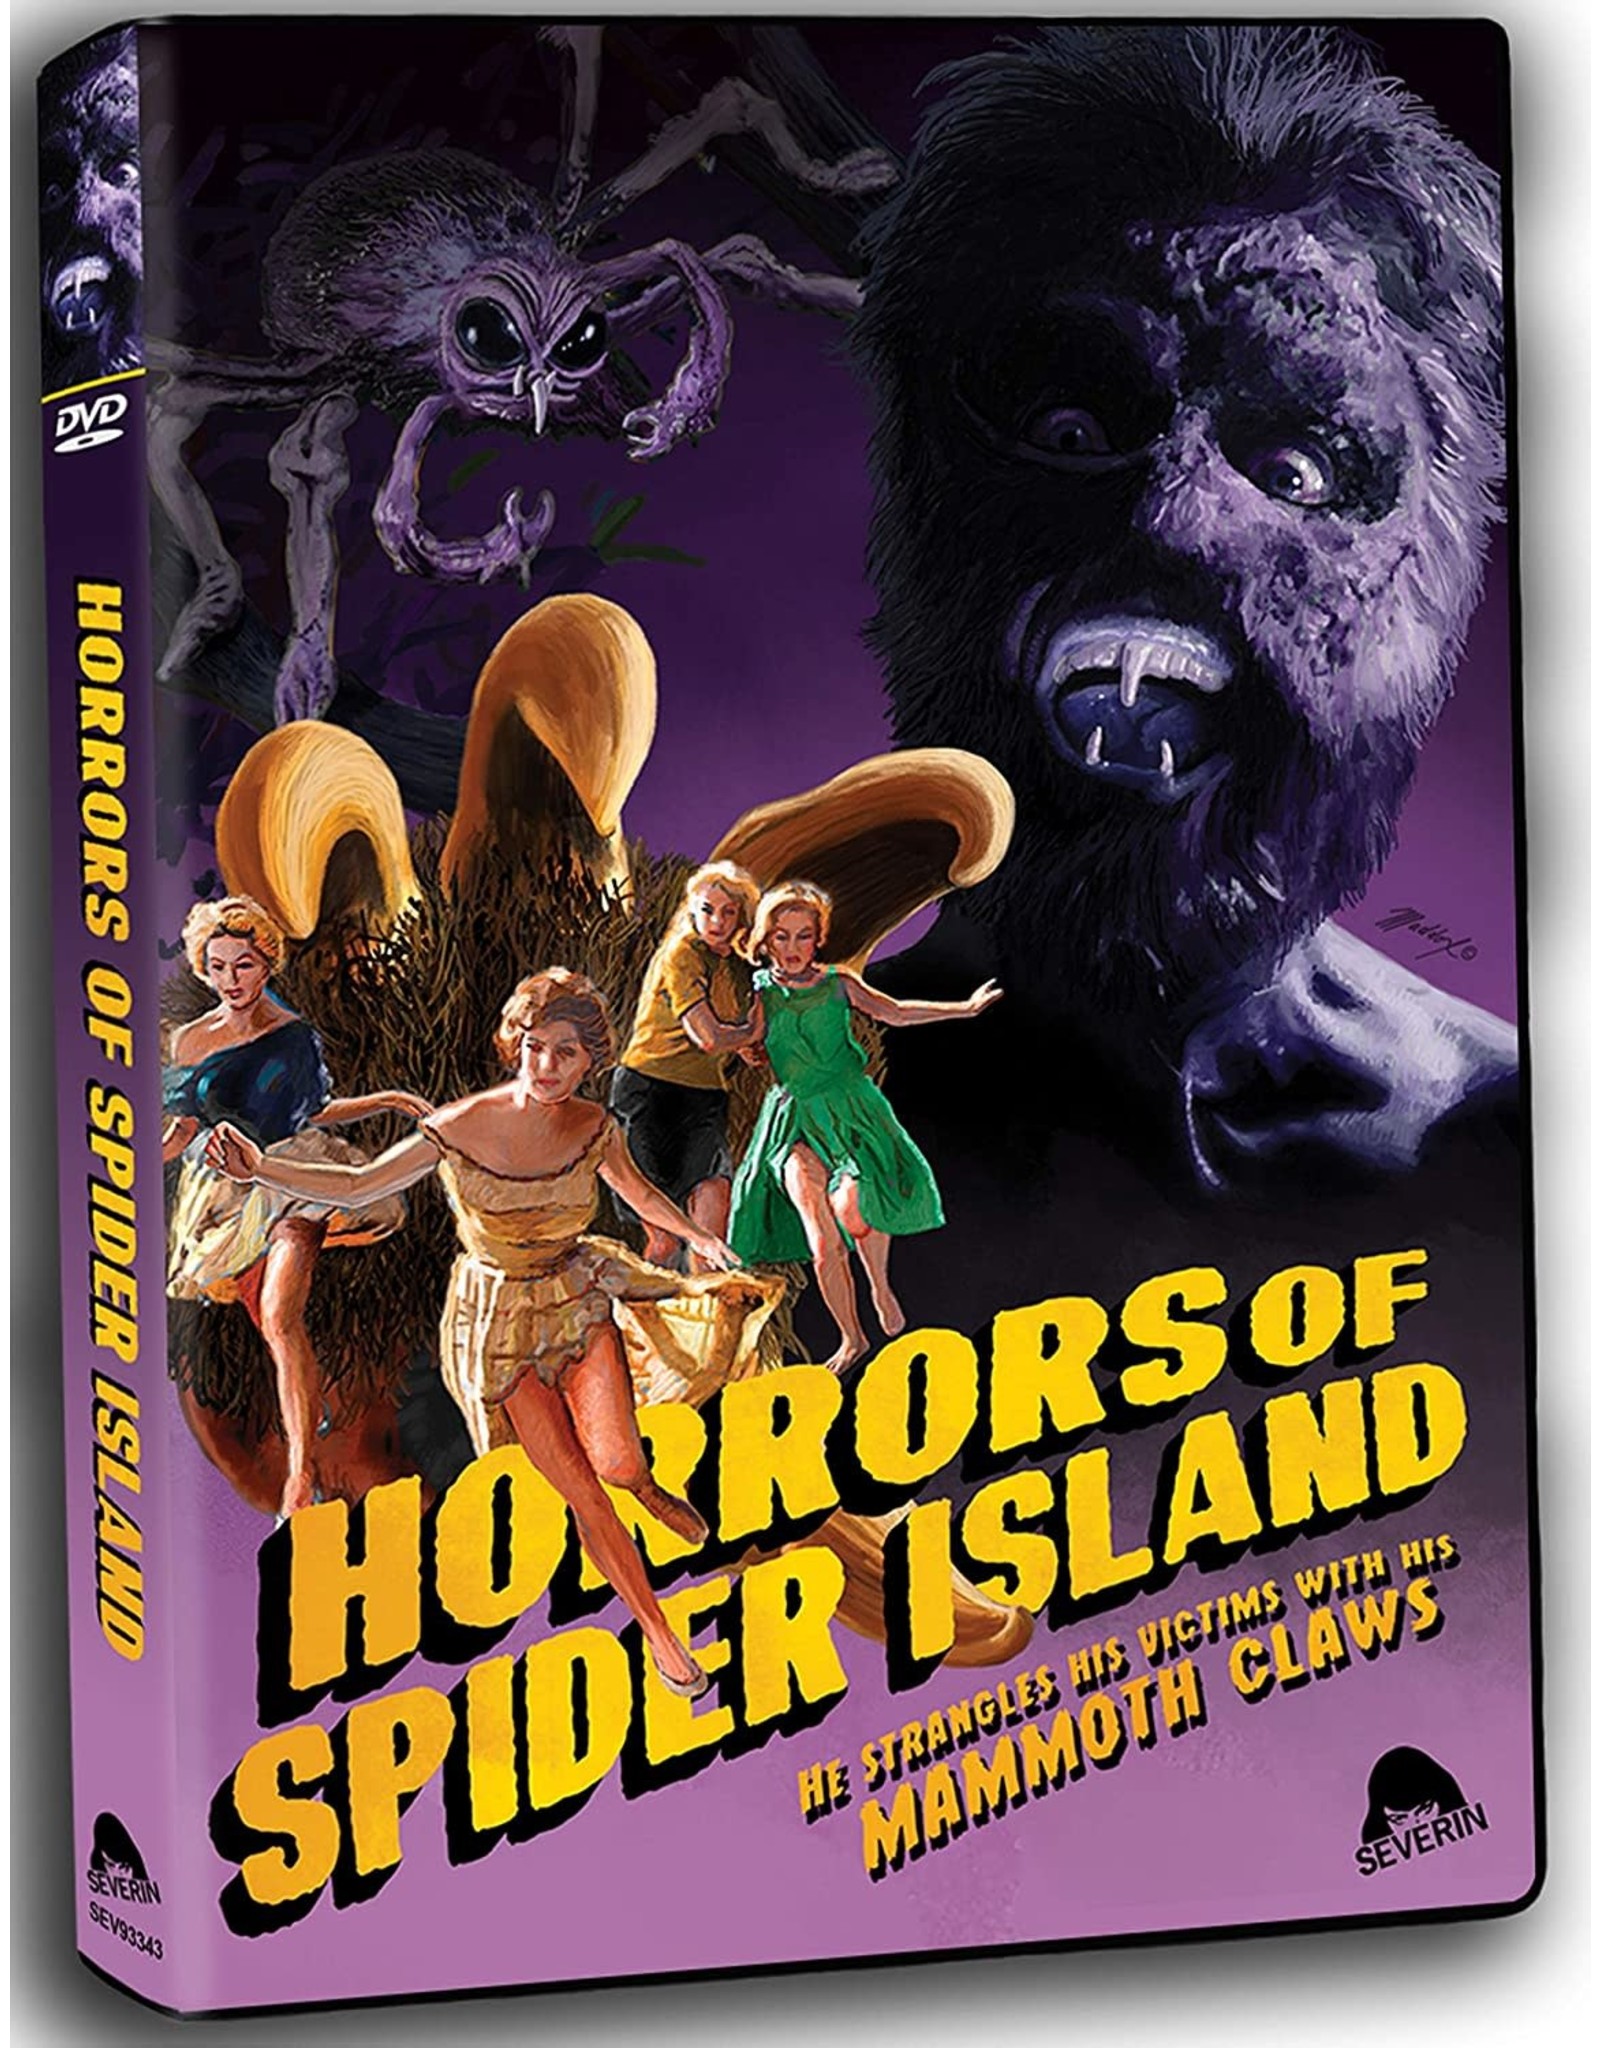 Horror Horrors of Spider Island Severin (Brand New)